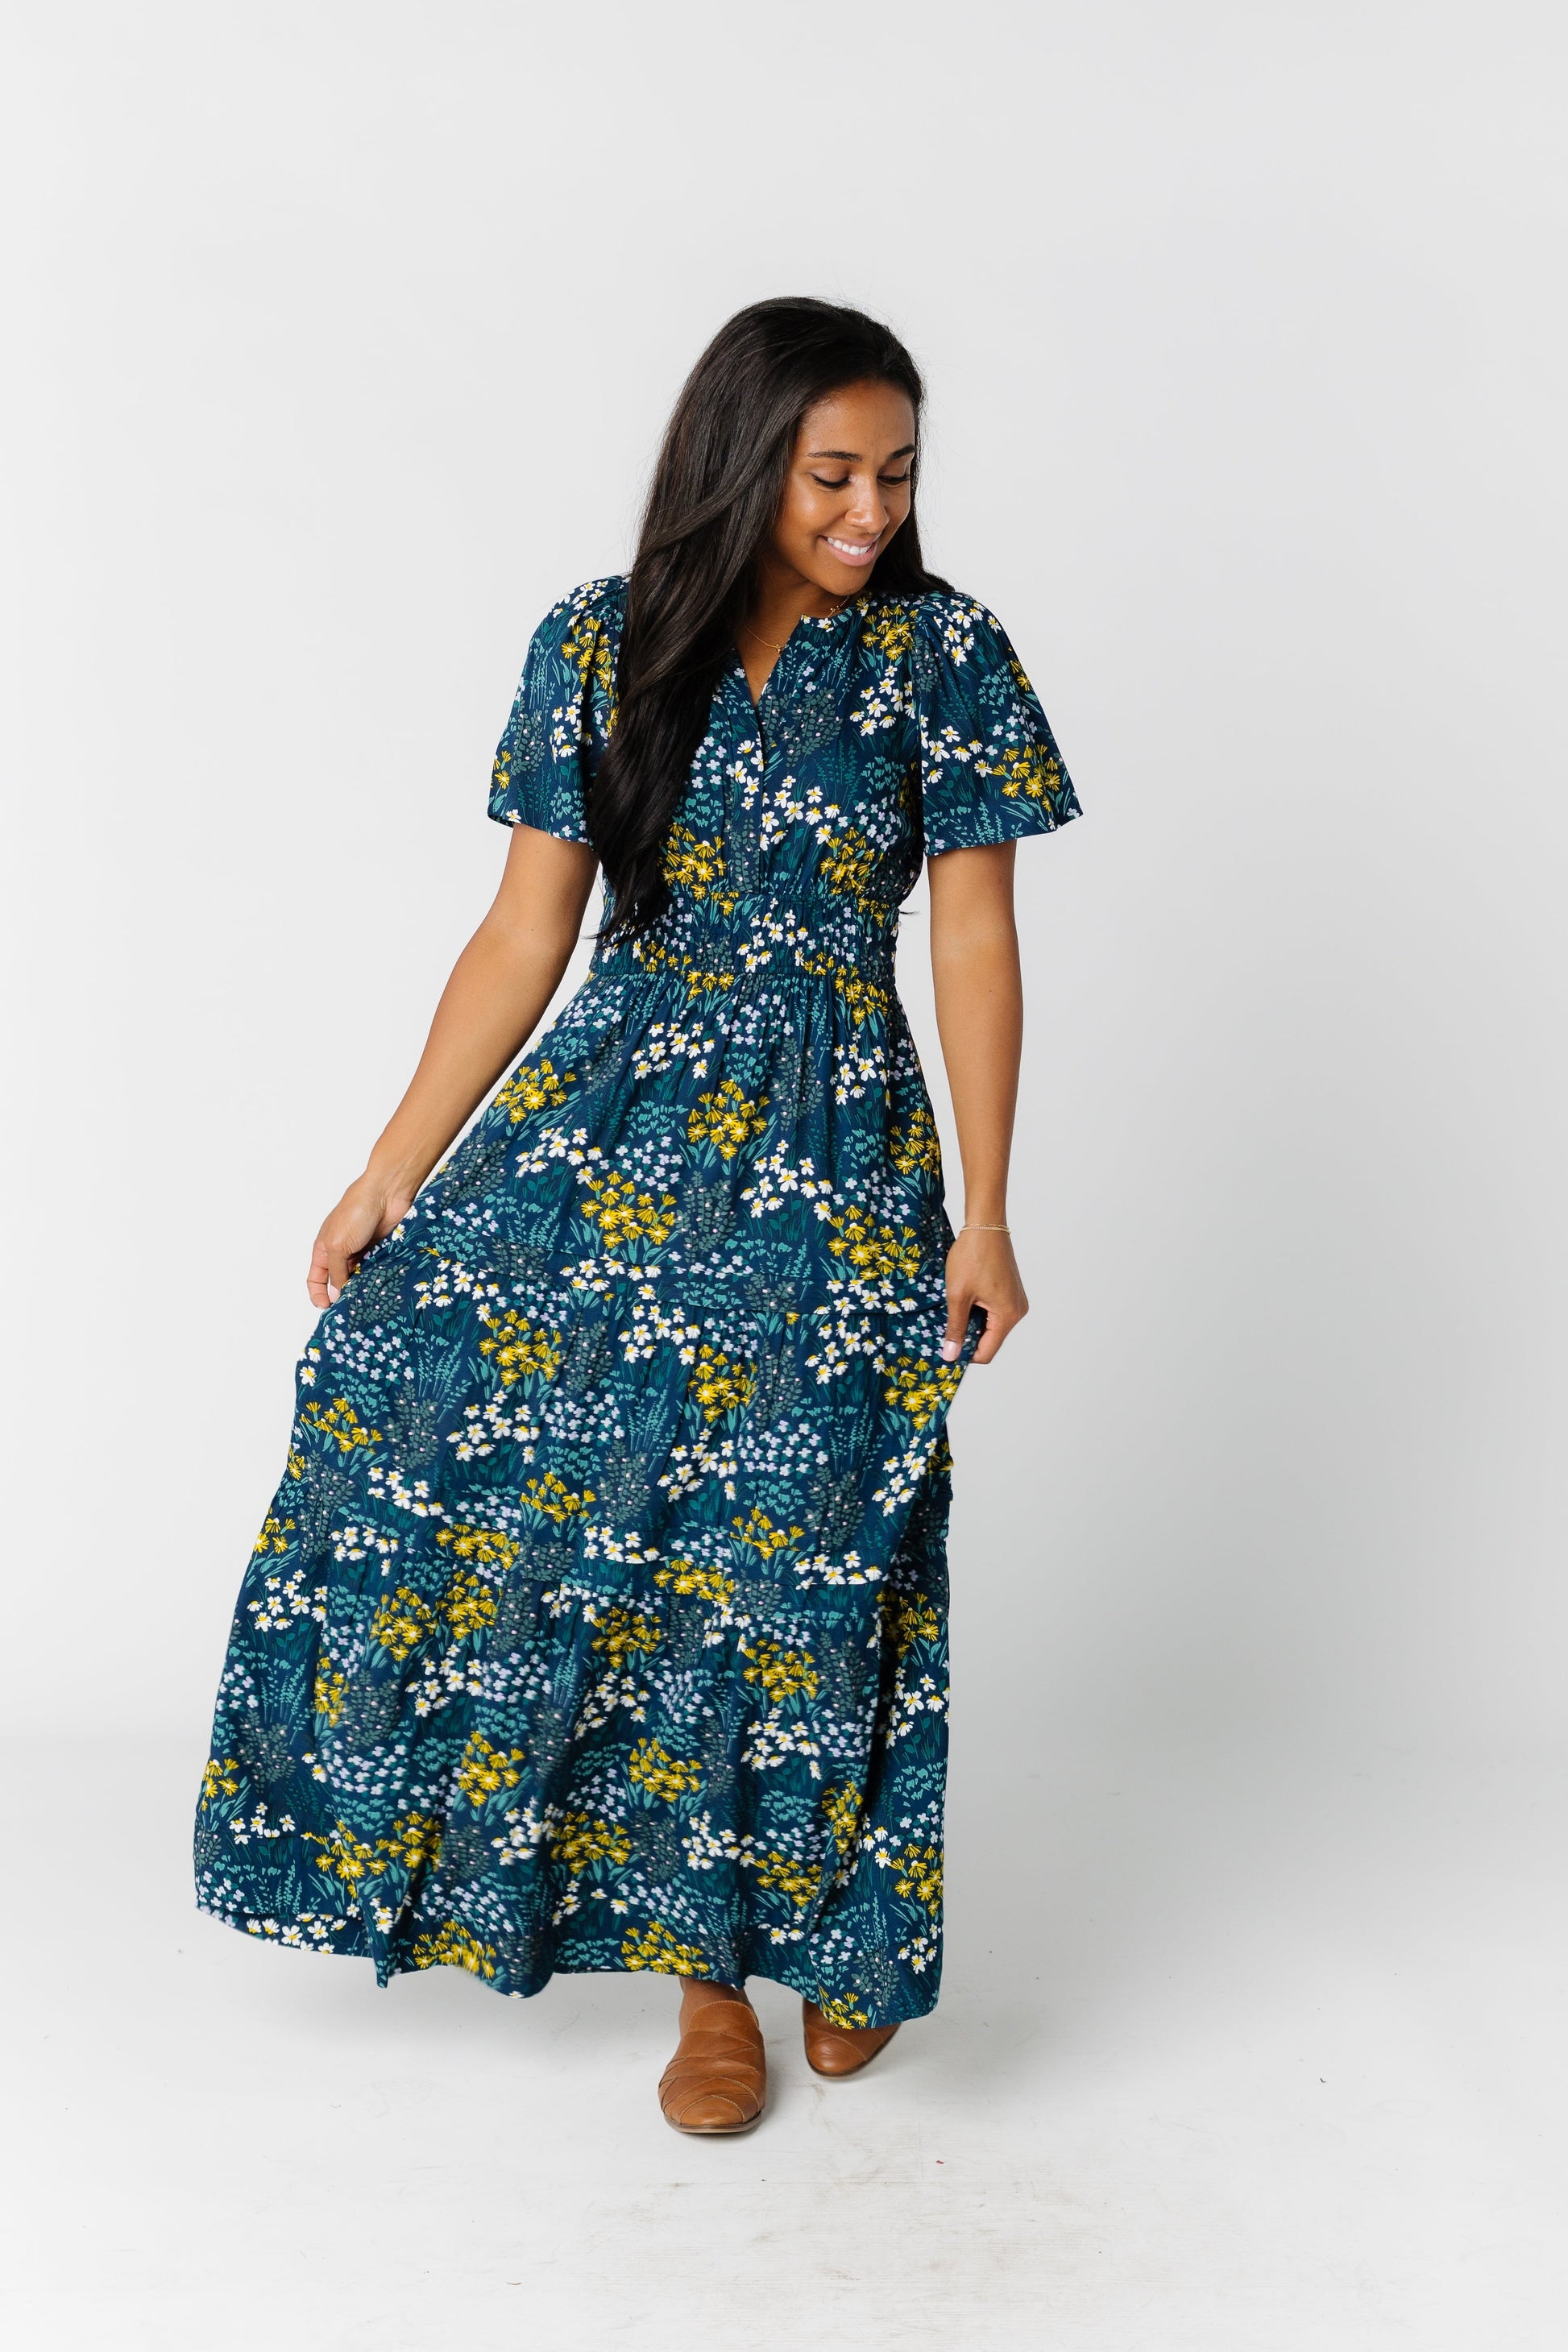 Citrus Shae Garden Print Dress WOMEN'S DRESS Citrus Navy Print L 